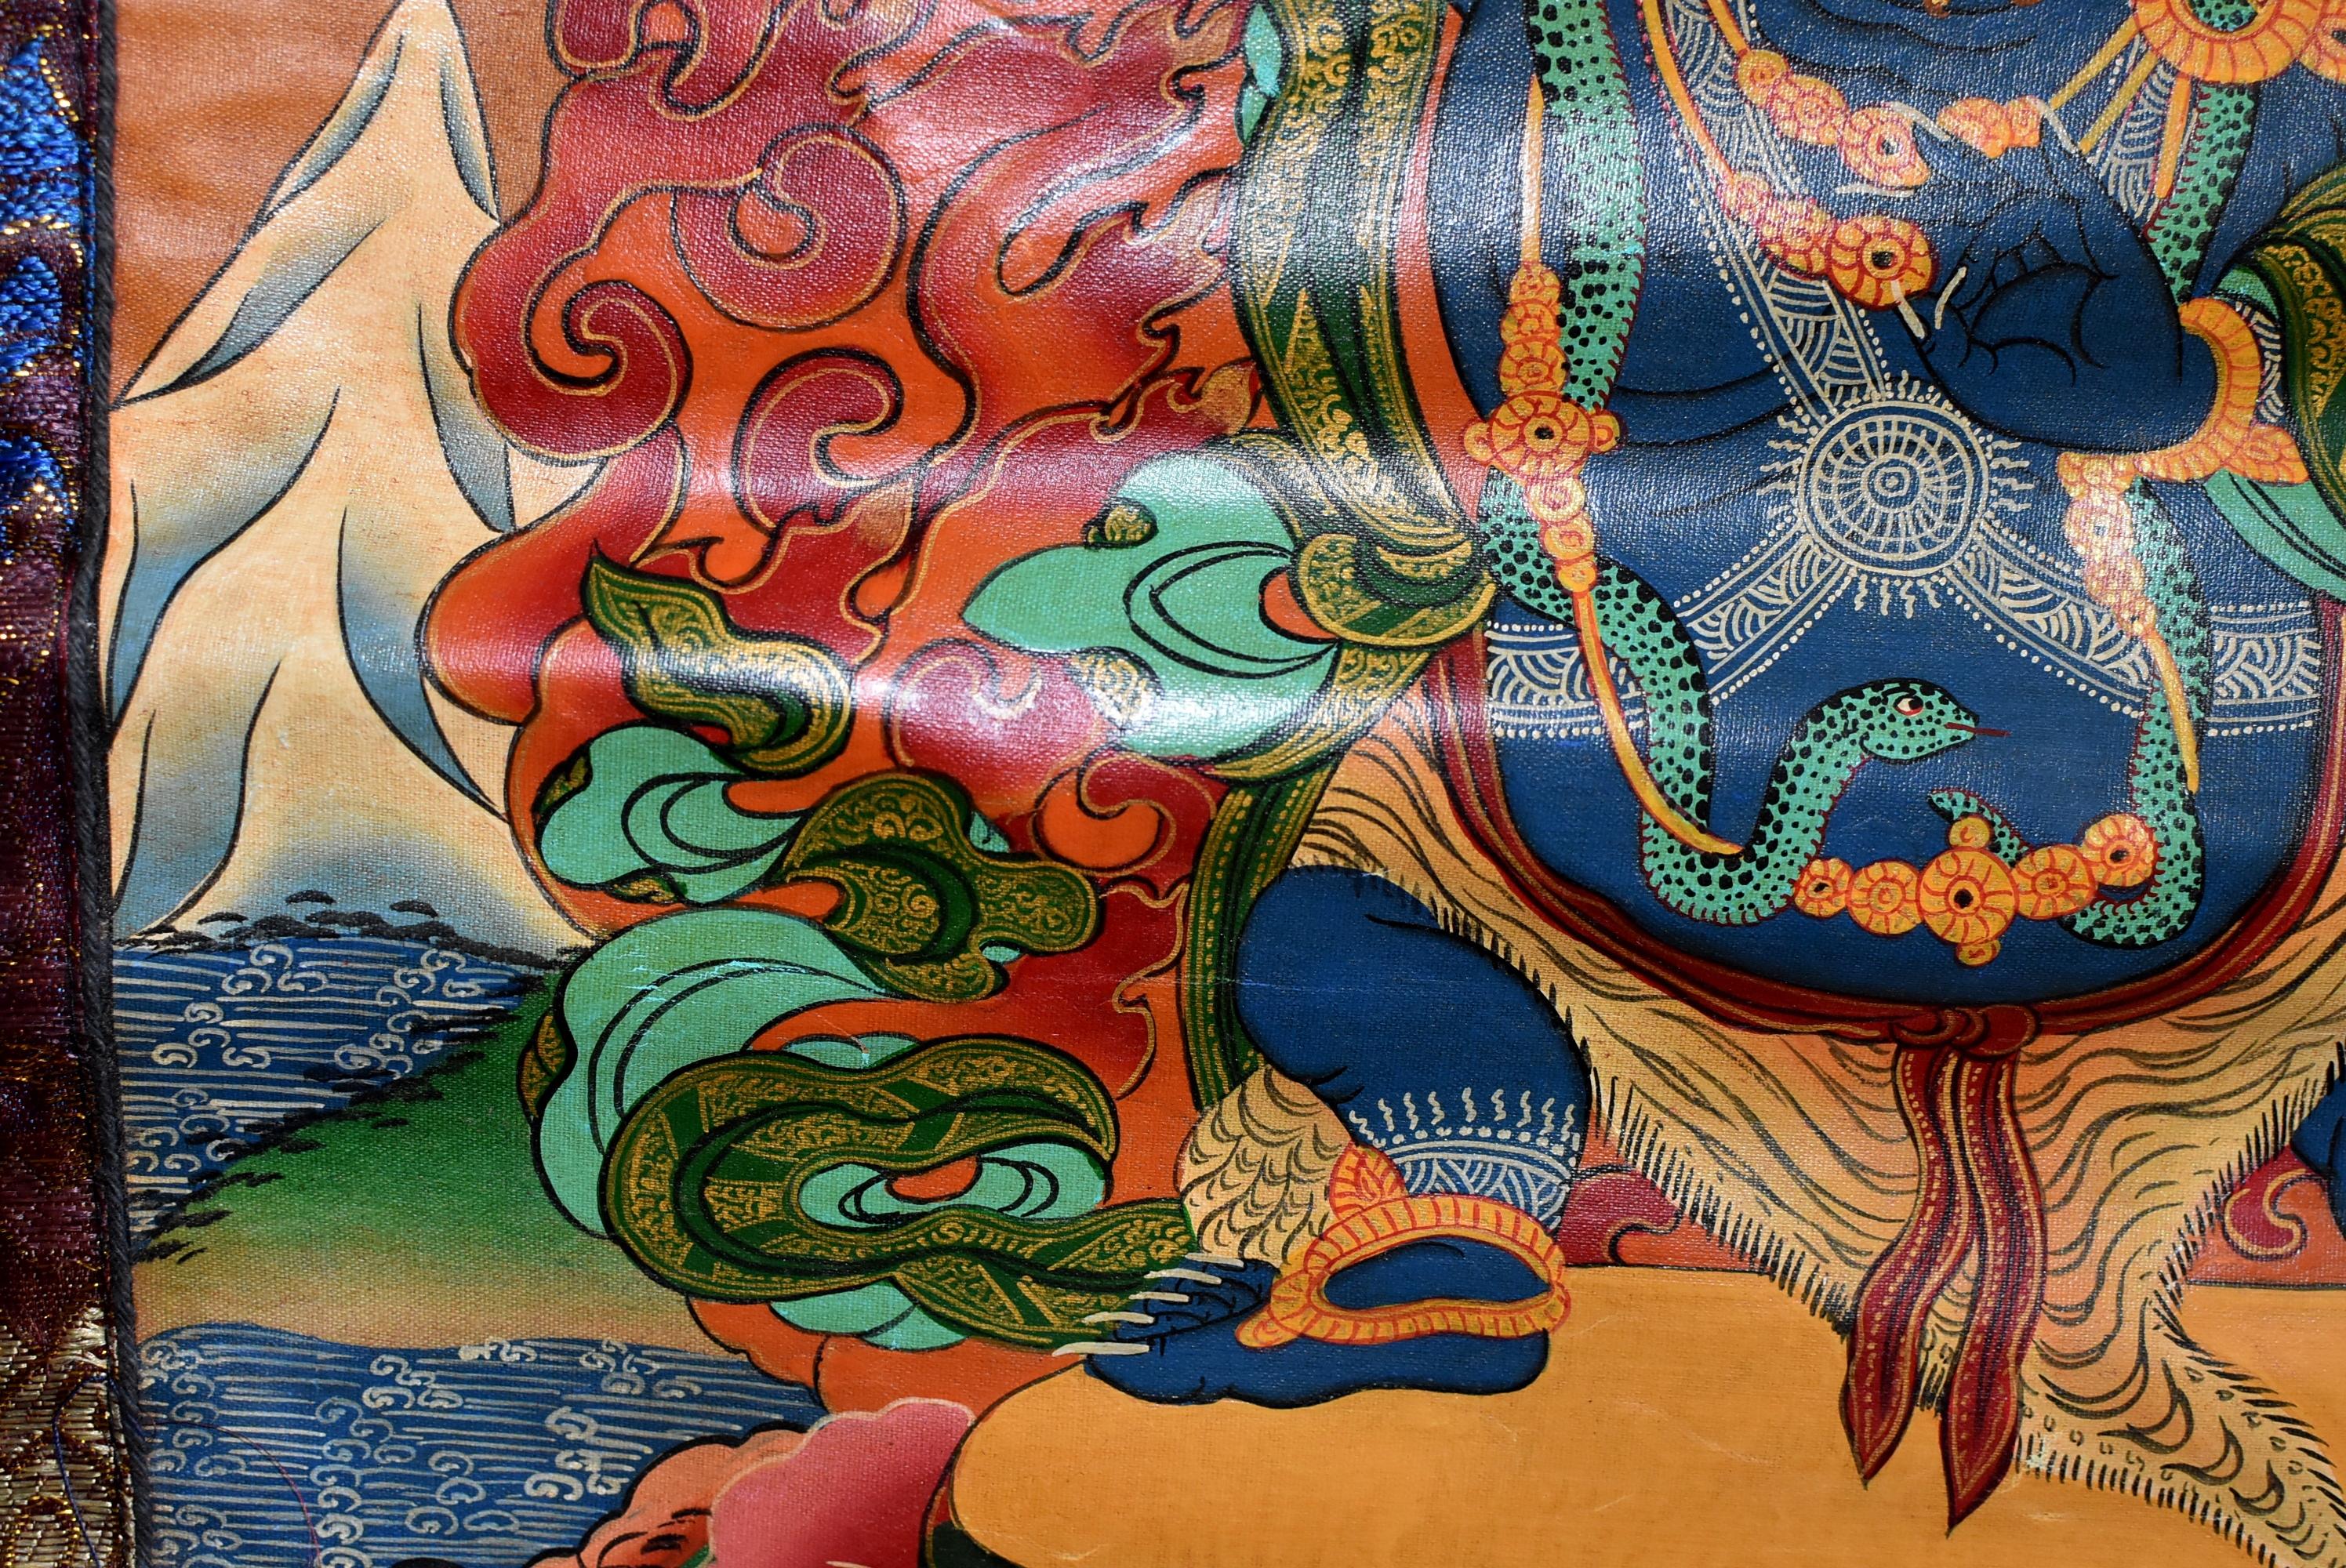 Tibetan Thanka Dorje Drolo, Hand-Painted 15